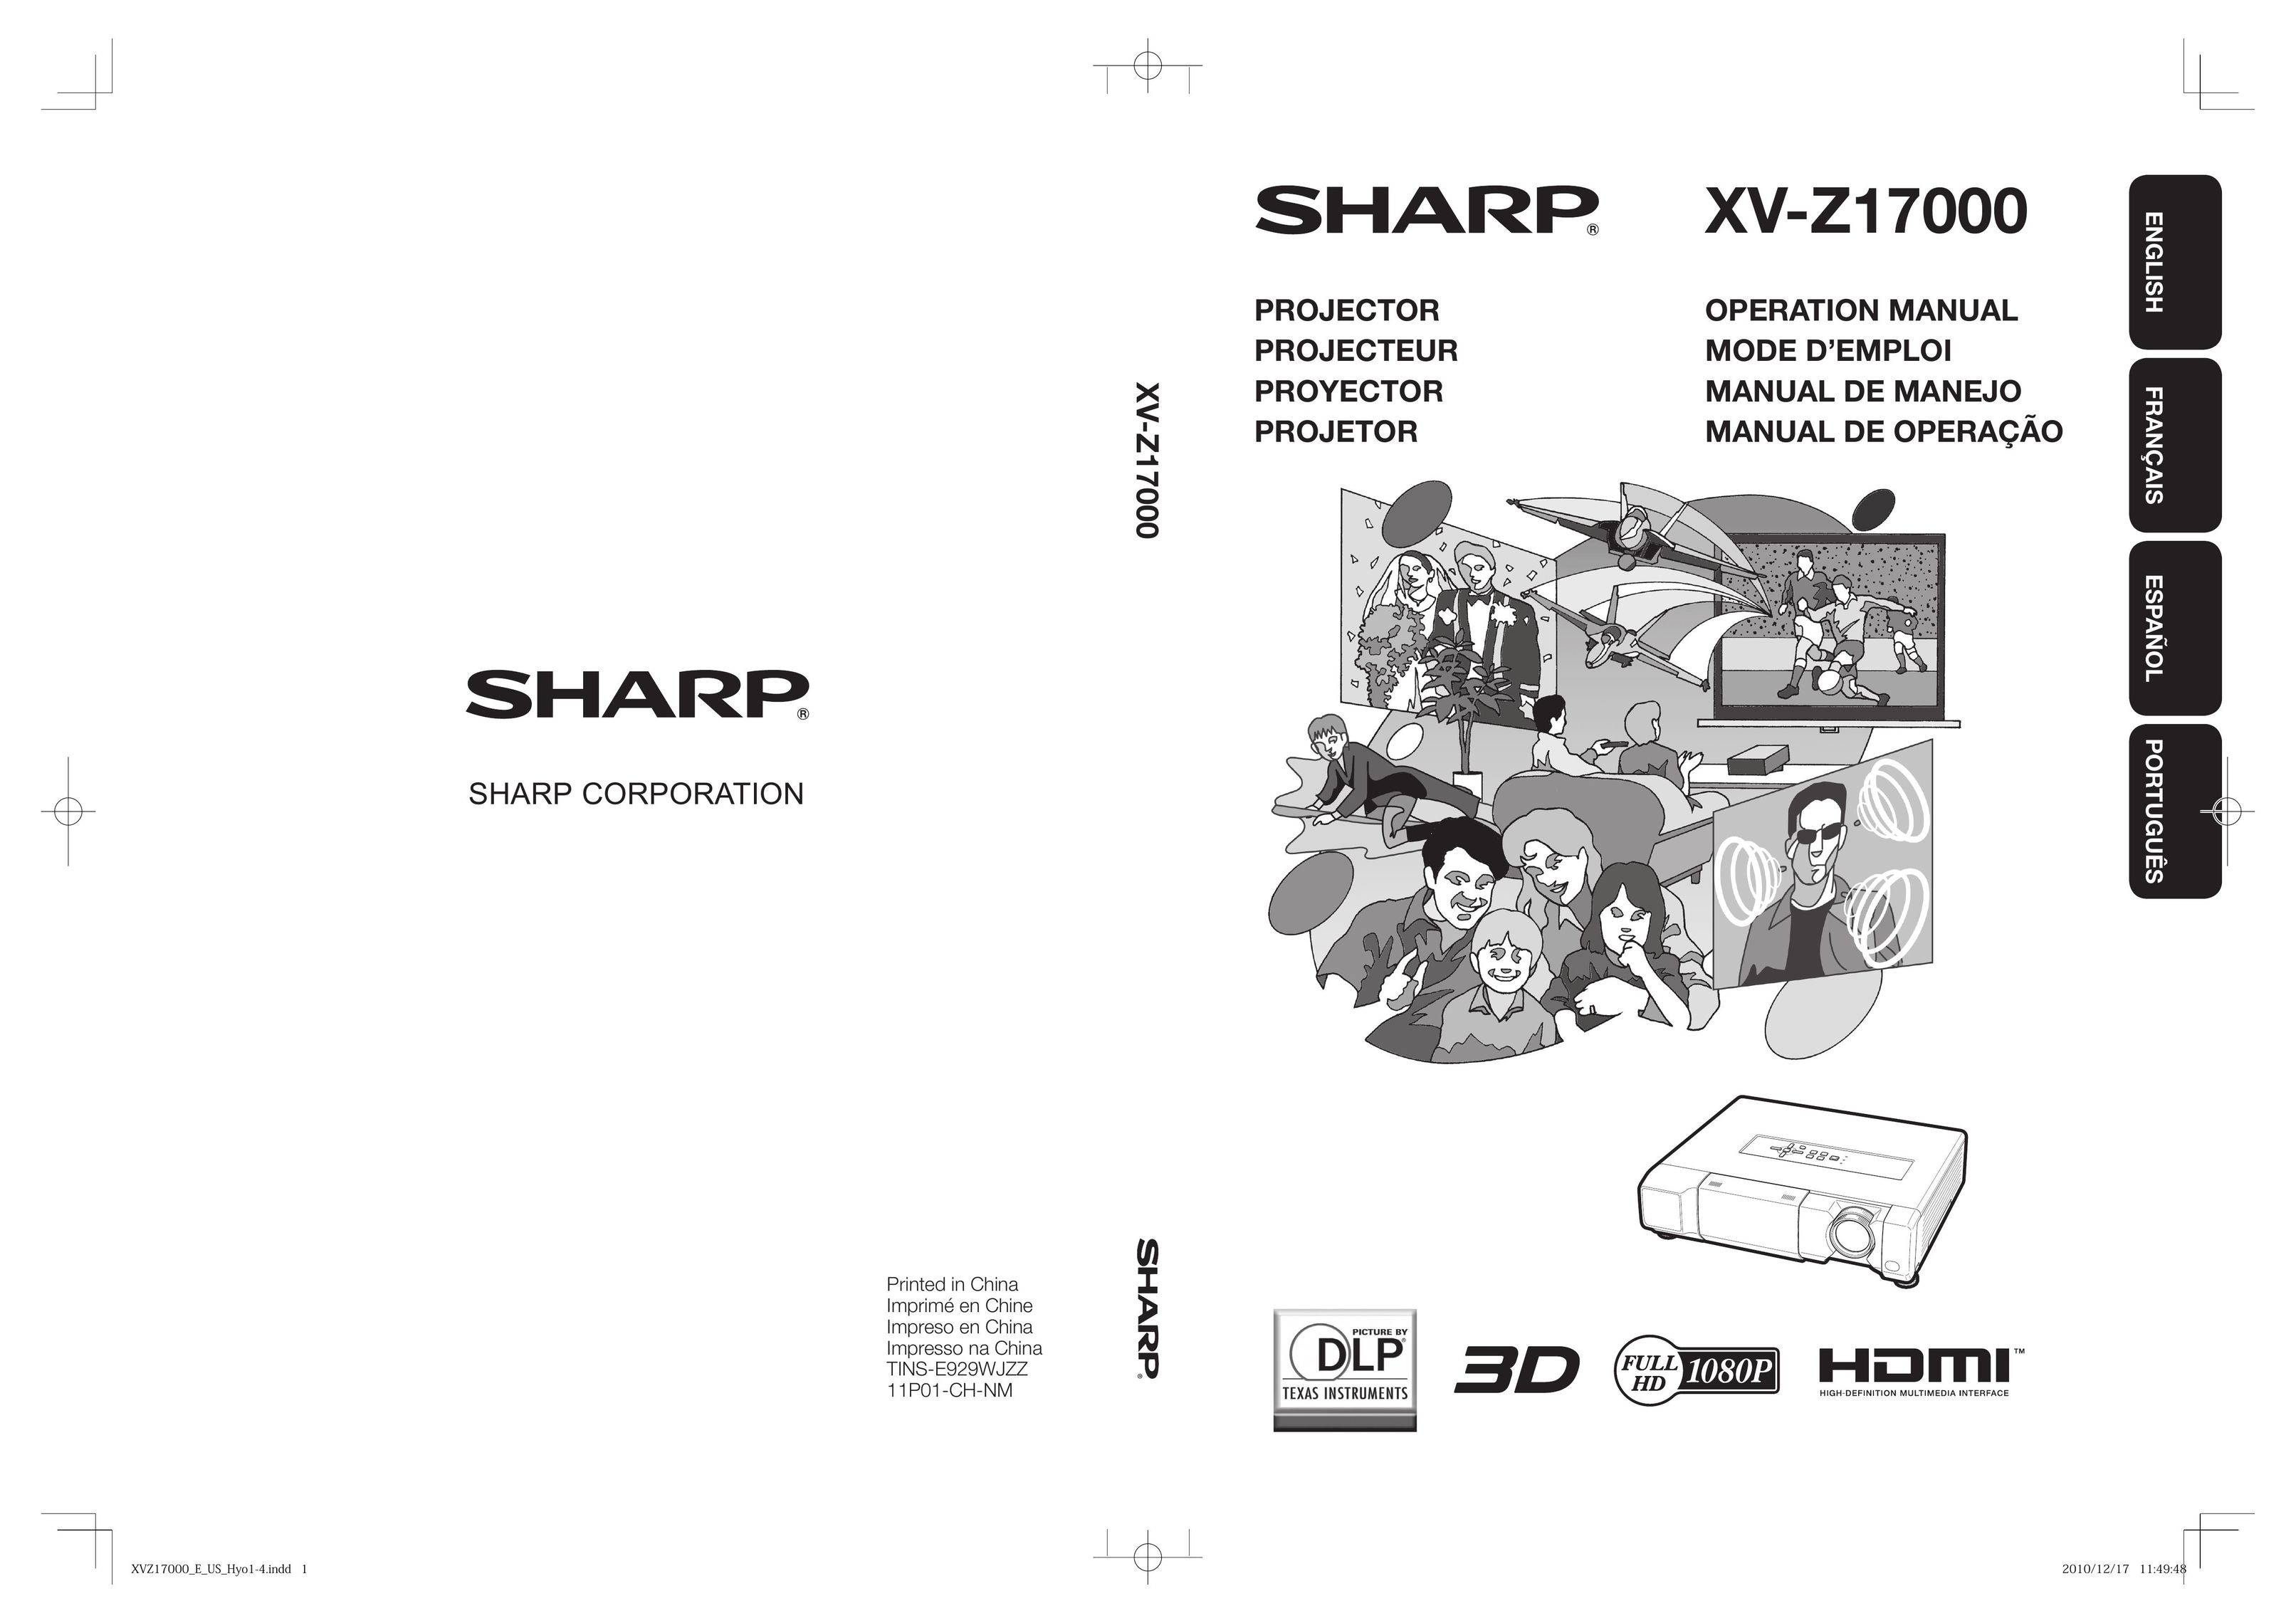 Sharp XV-Z17000 Home Theater System User Manual